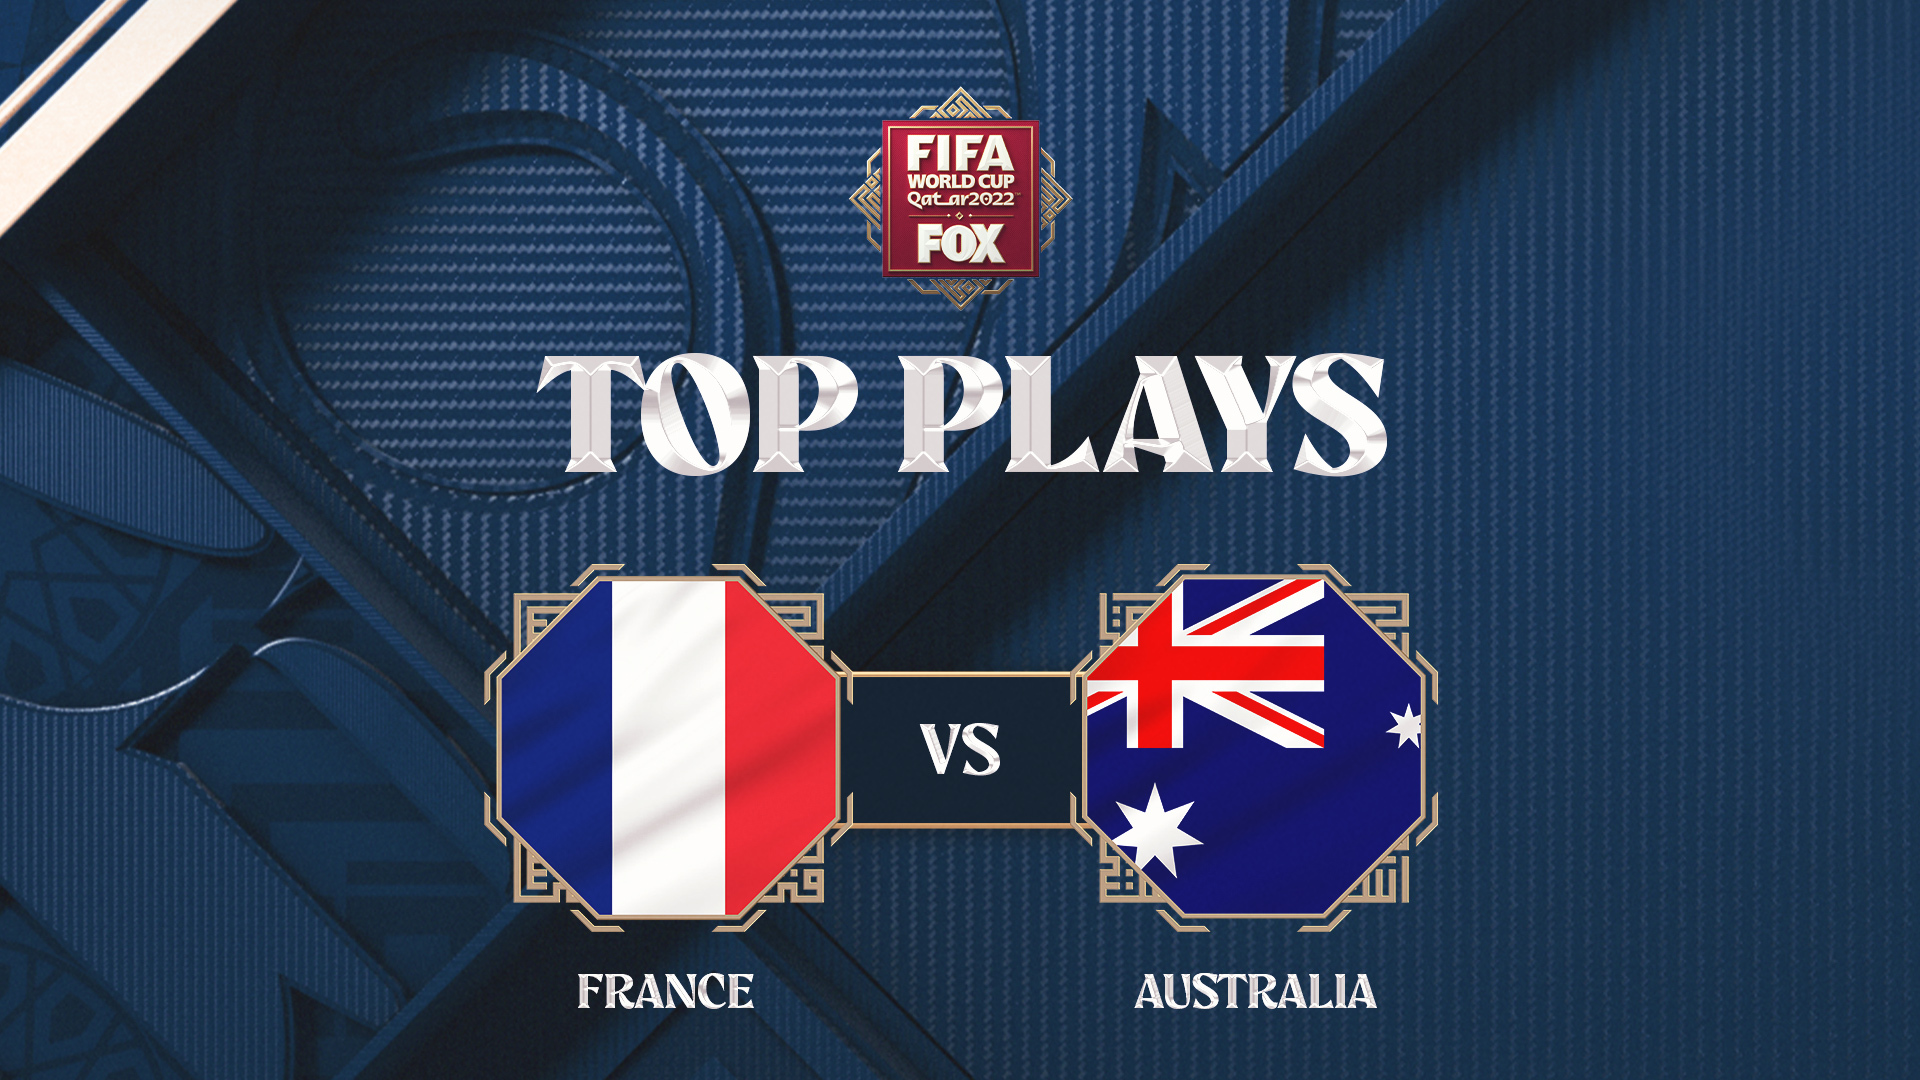 France vs Australia